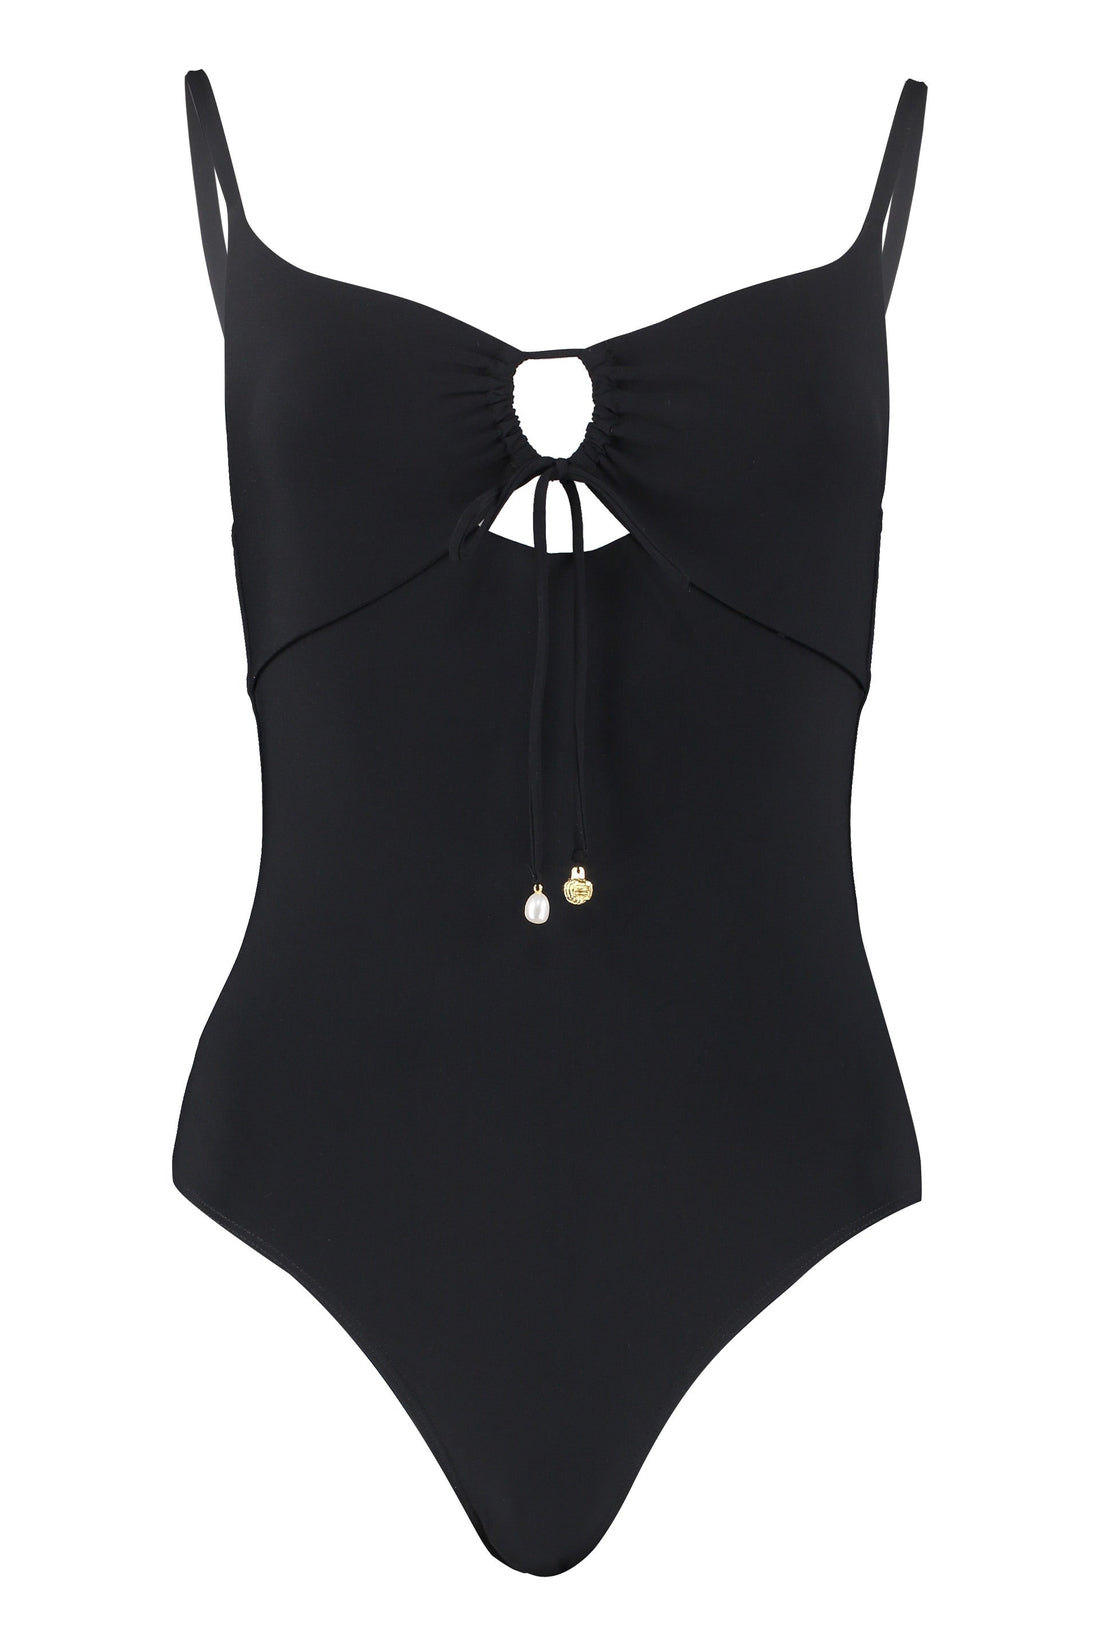 Tory Burch-OUTLET-SALE-One-piece swimsuit-ARCHIVIST